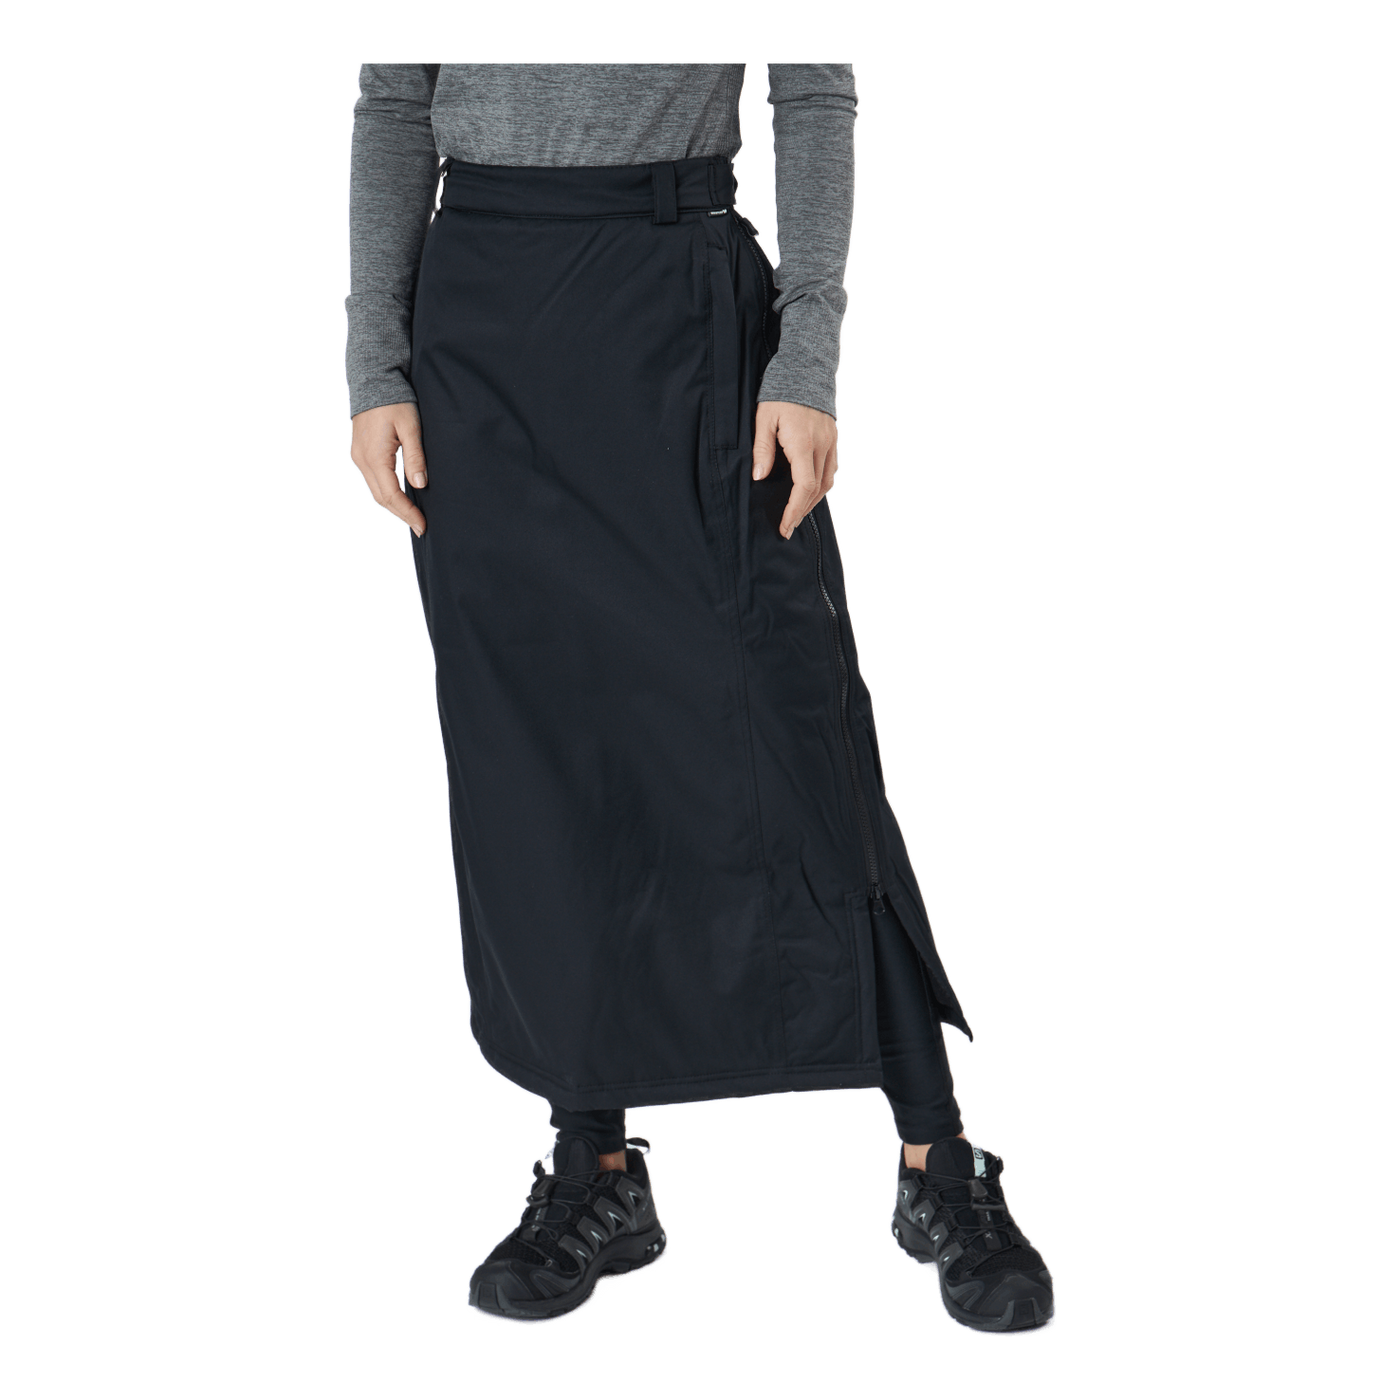 Franny W Insulated Skirt Black